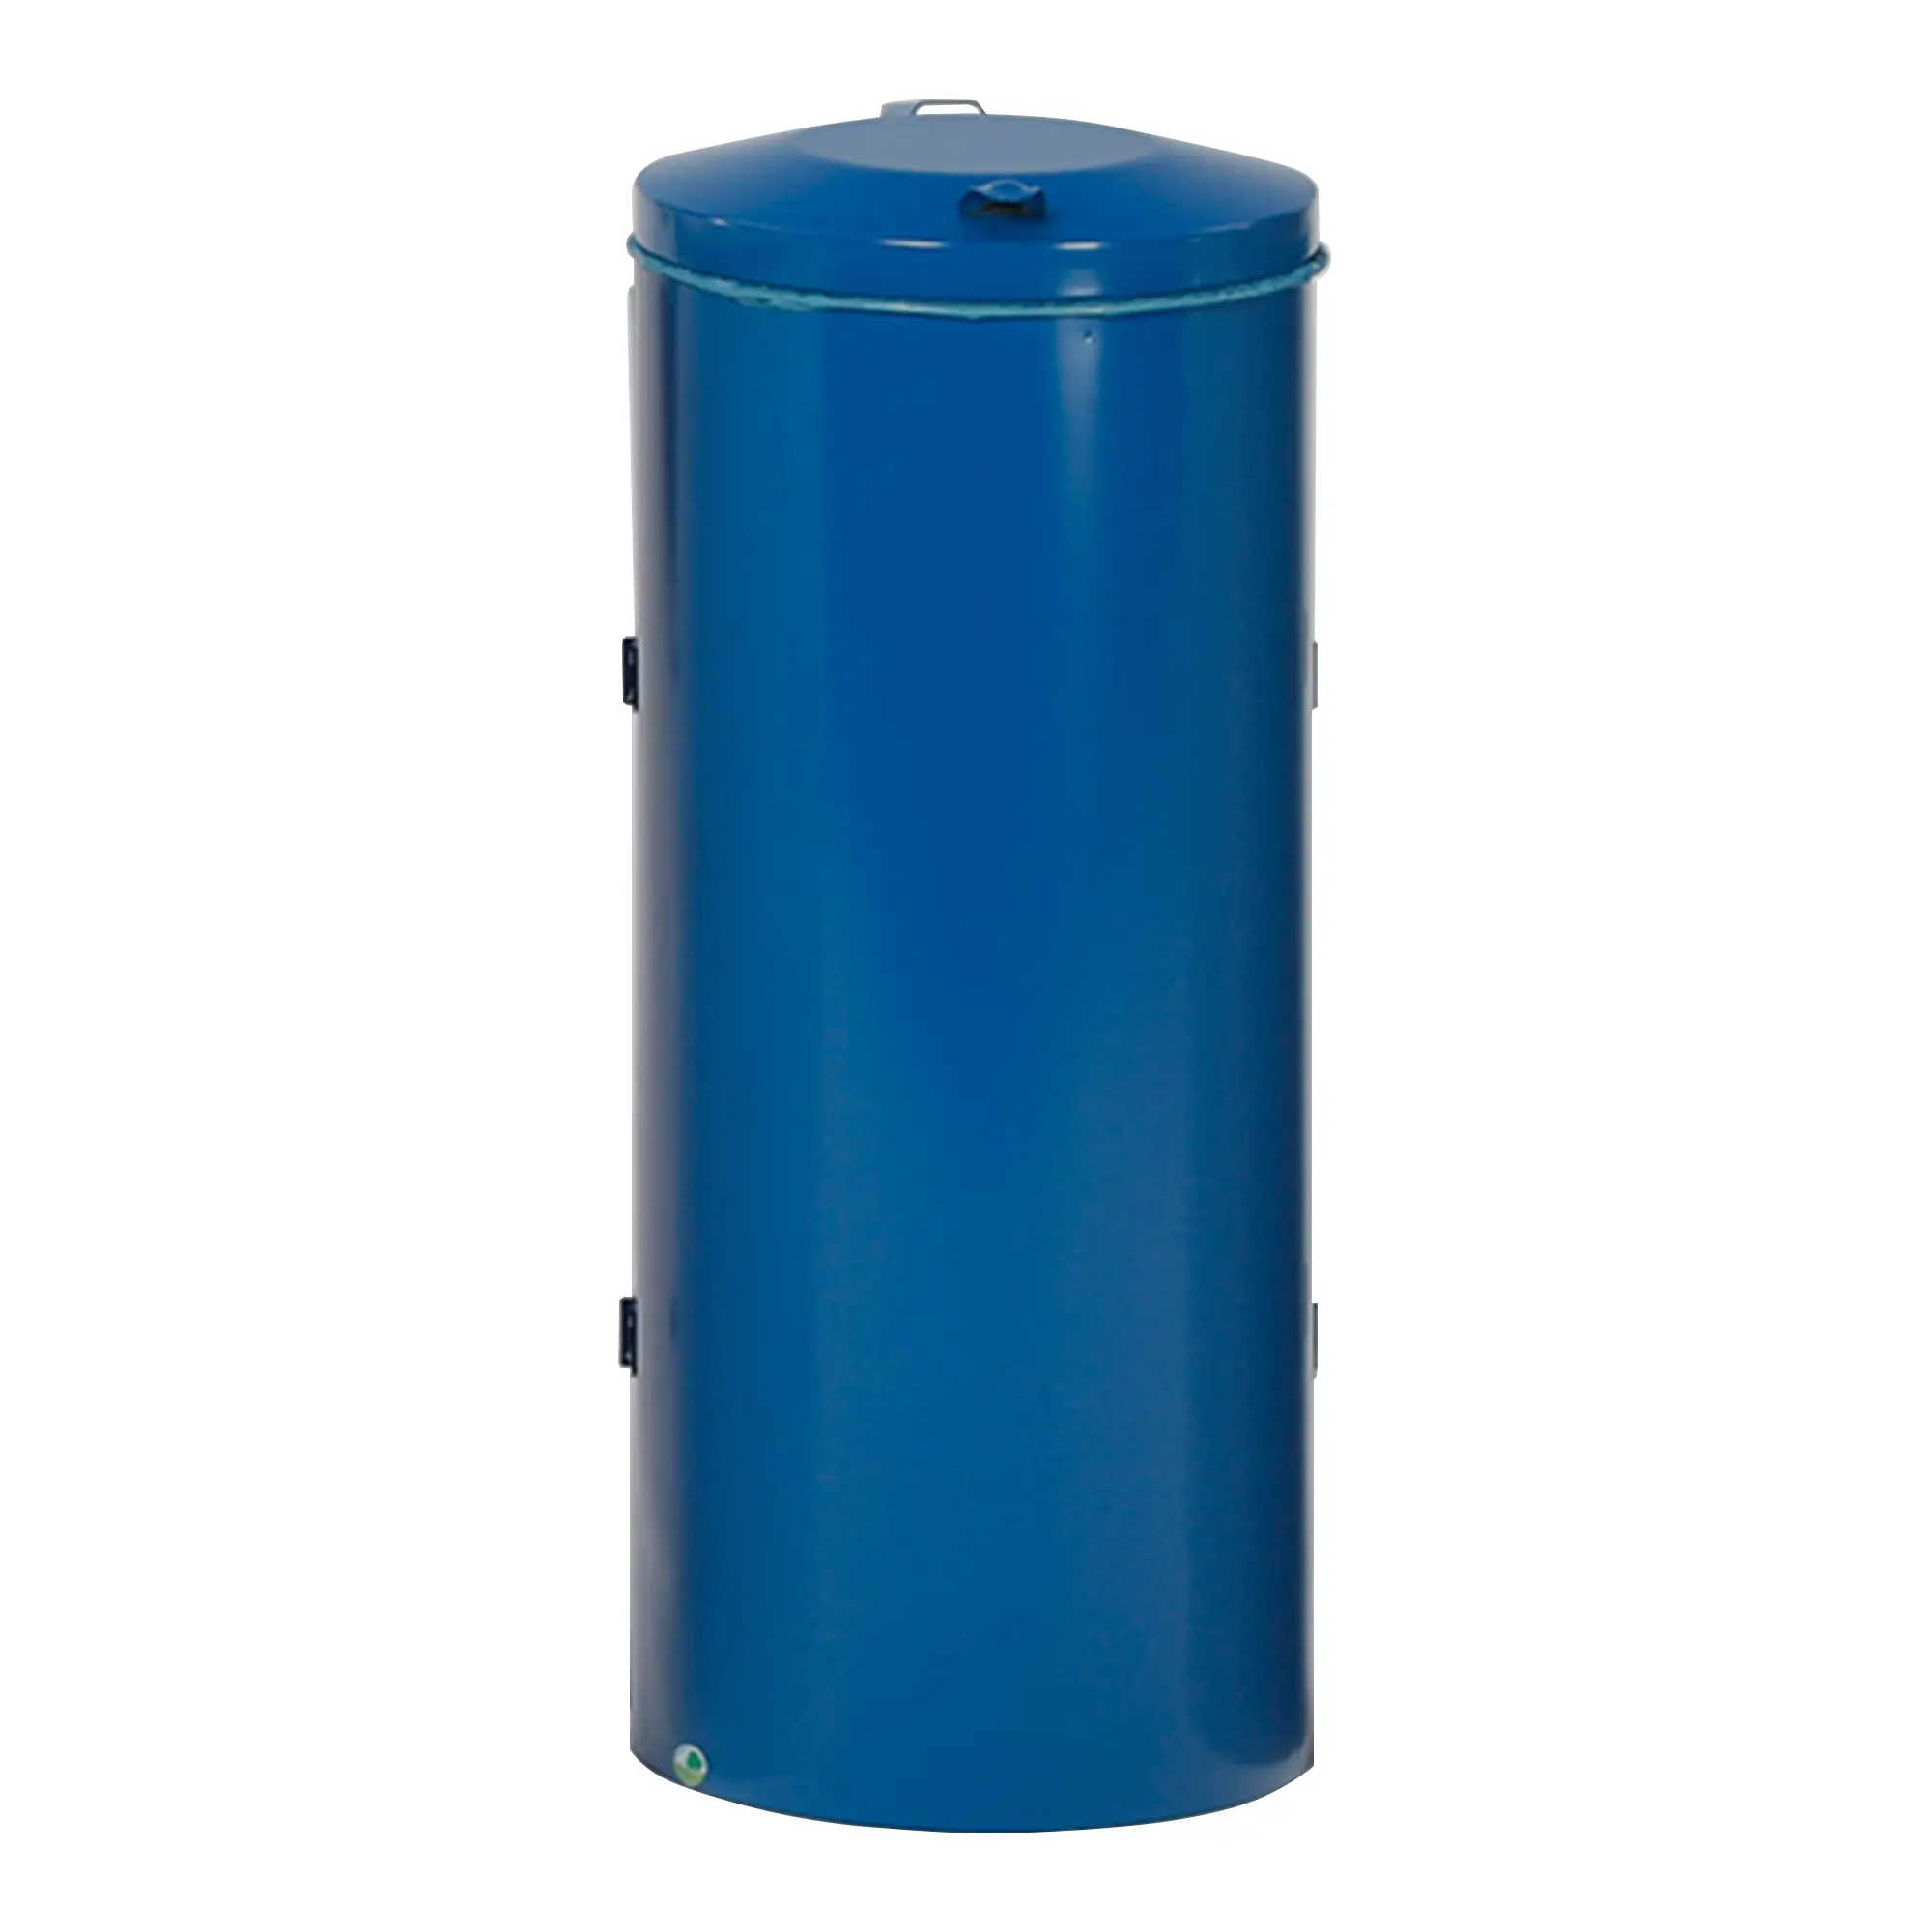 VAR Abfallsammler Metall, Kompakt-Doppeltür, 150 Liter blau 1069_1